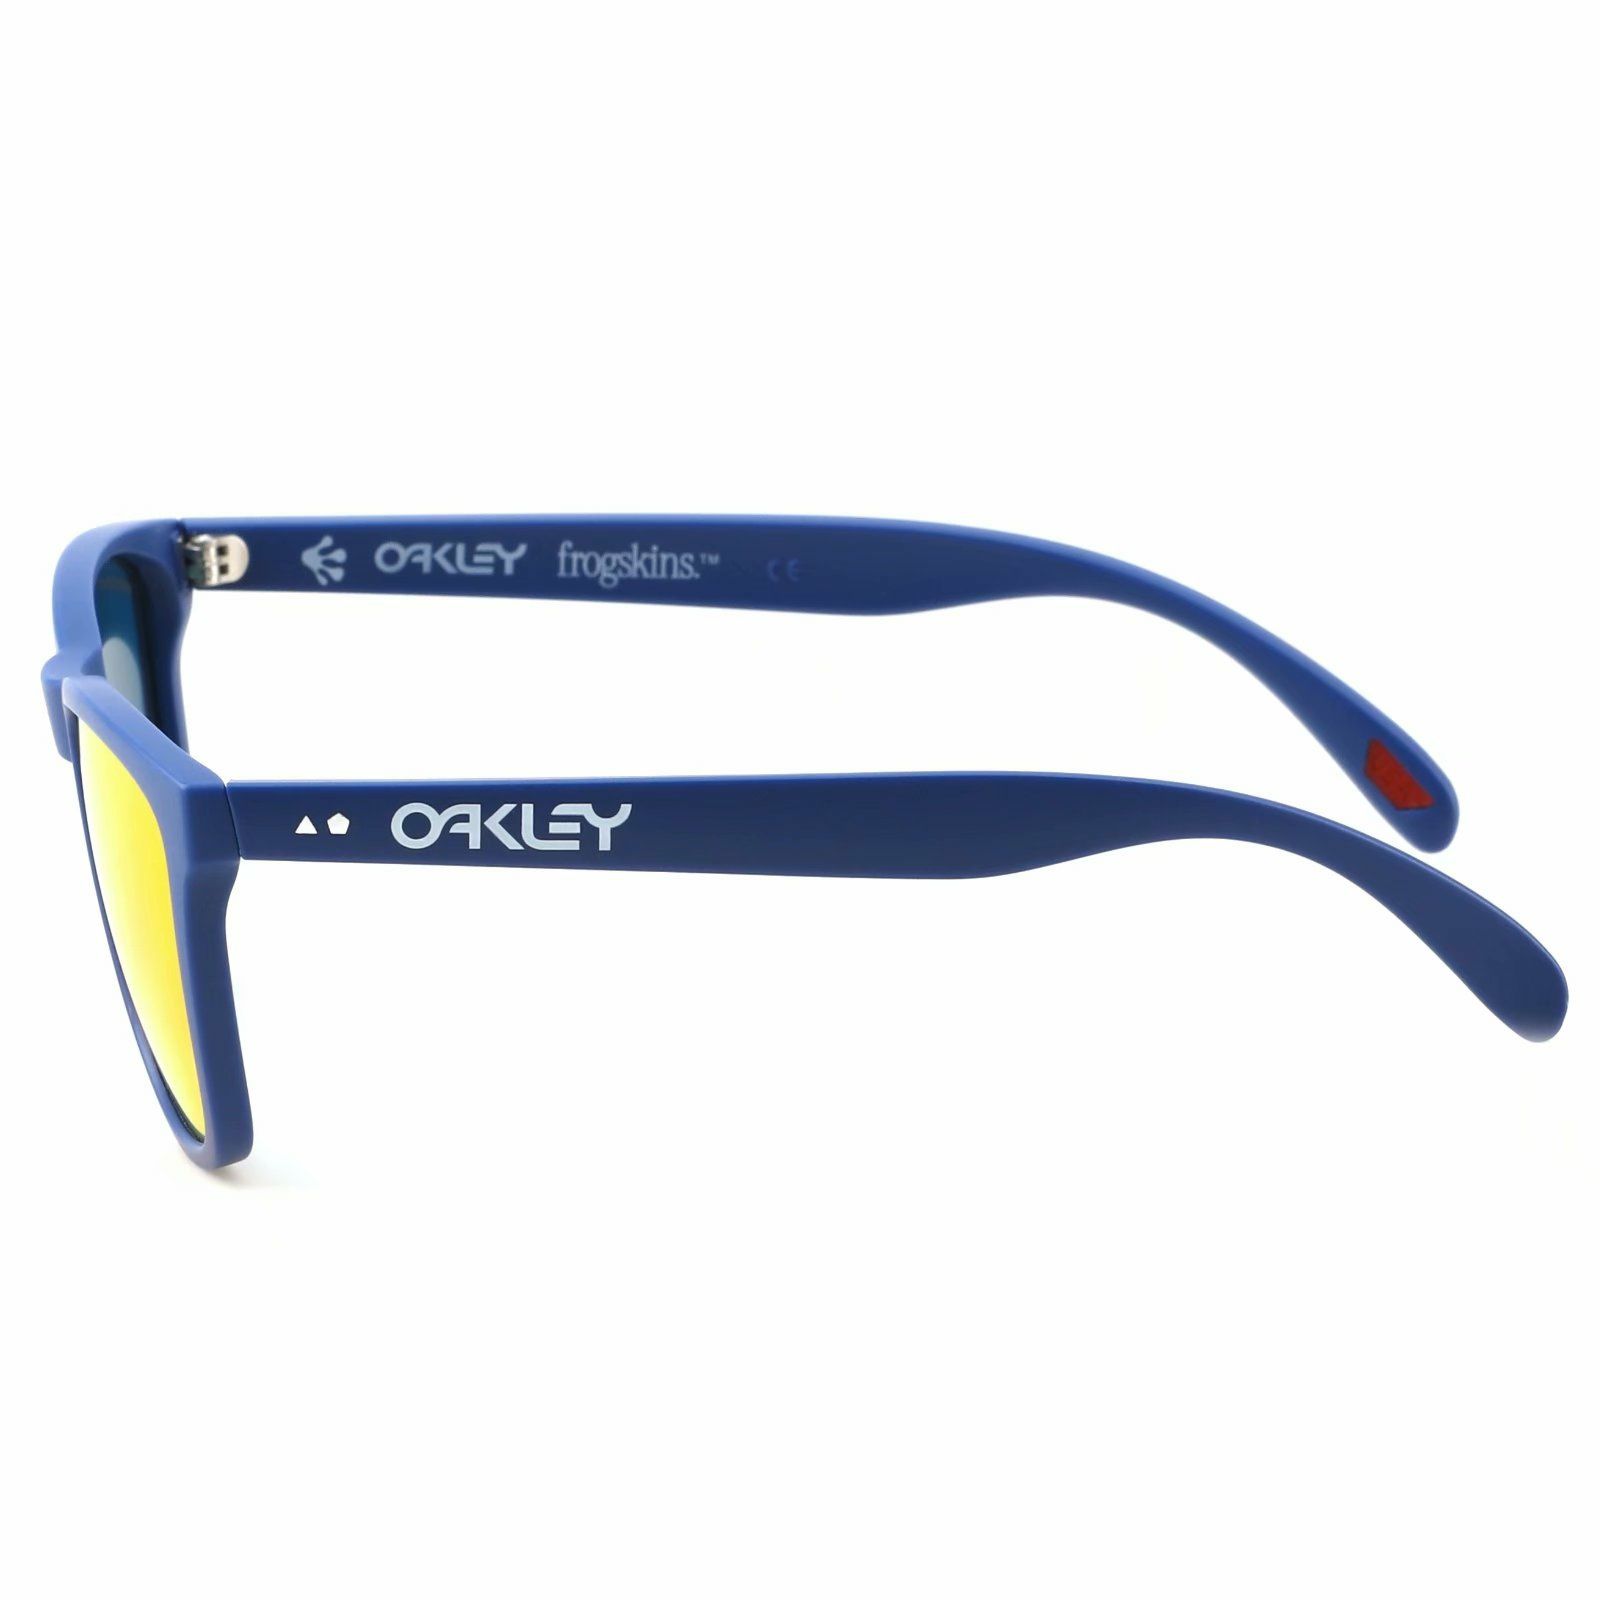 Oakley (USA) - Frogskins 35th Anniversary - Стильные очки